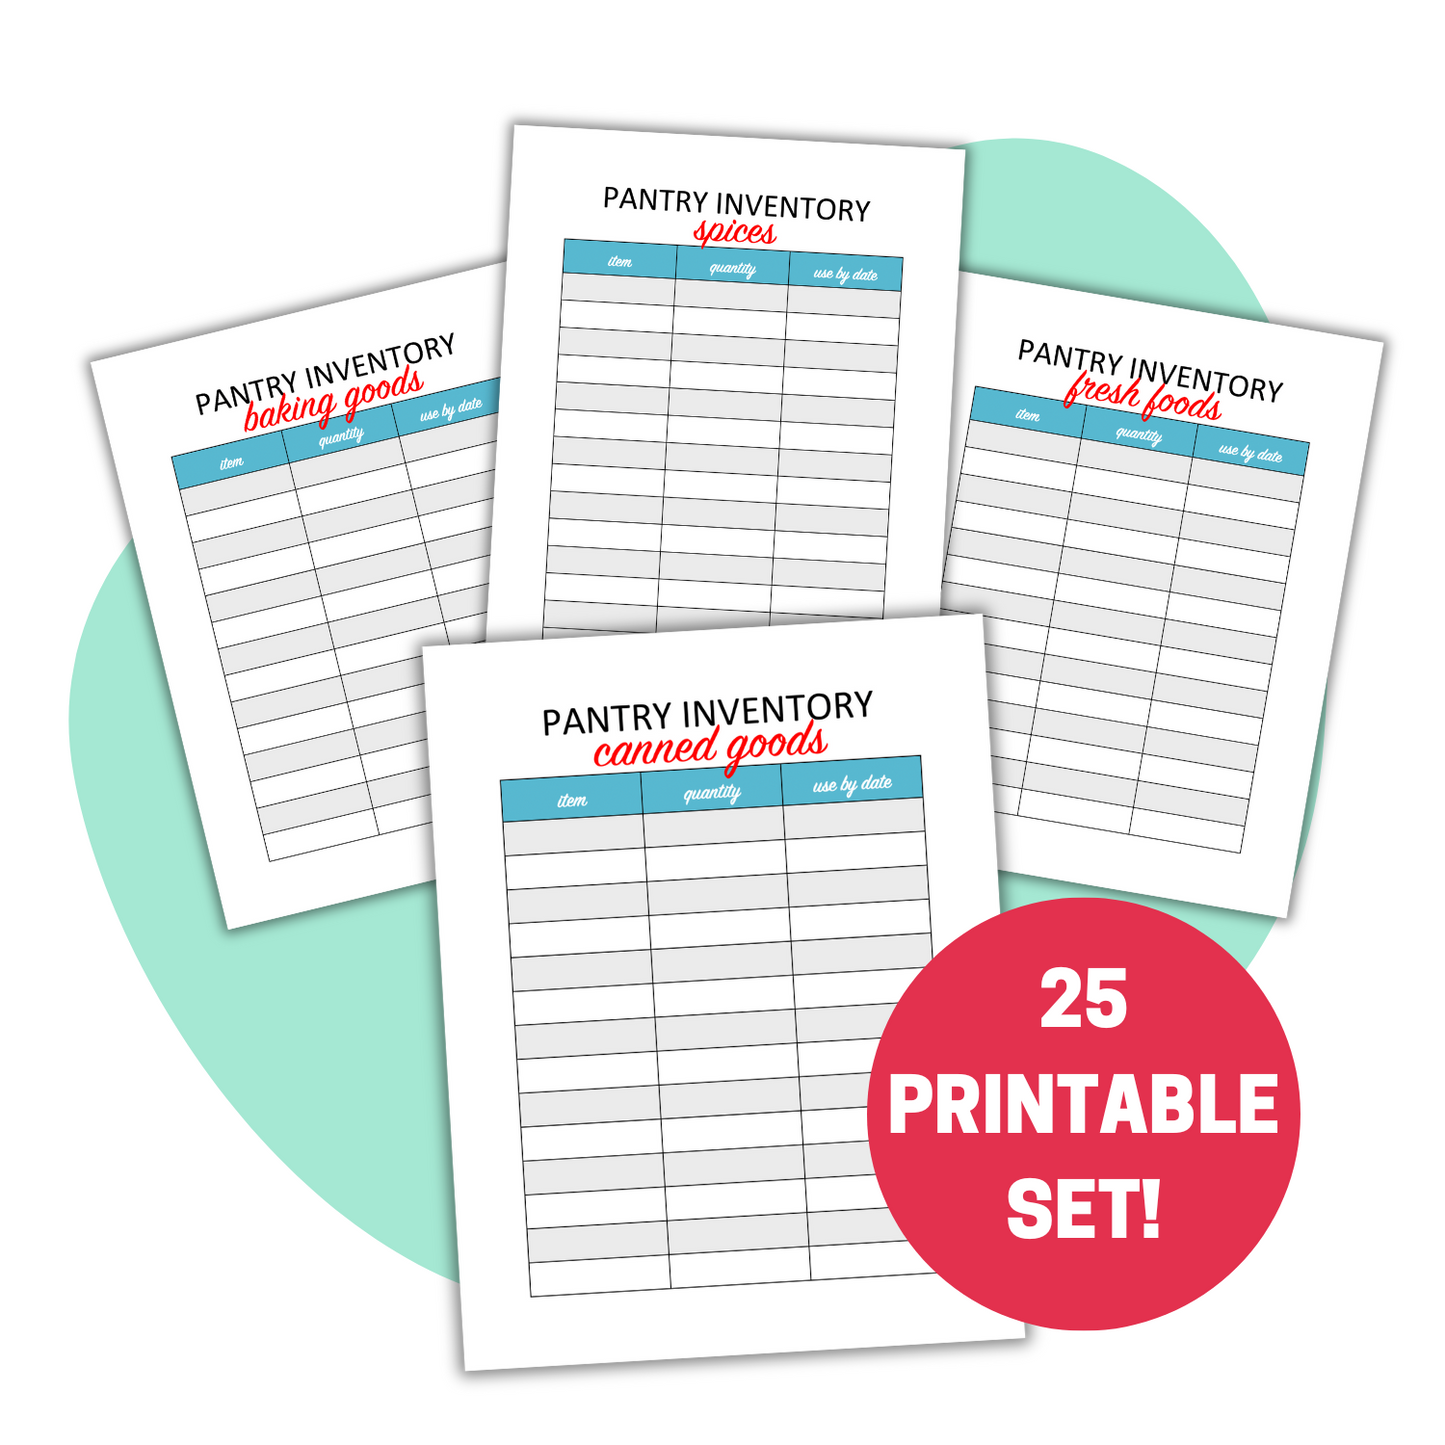 Printable Pantry Inventory sheets mockup. Text says 25 printable set.